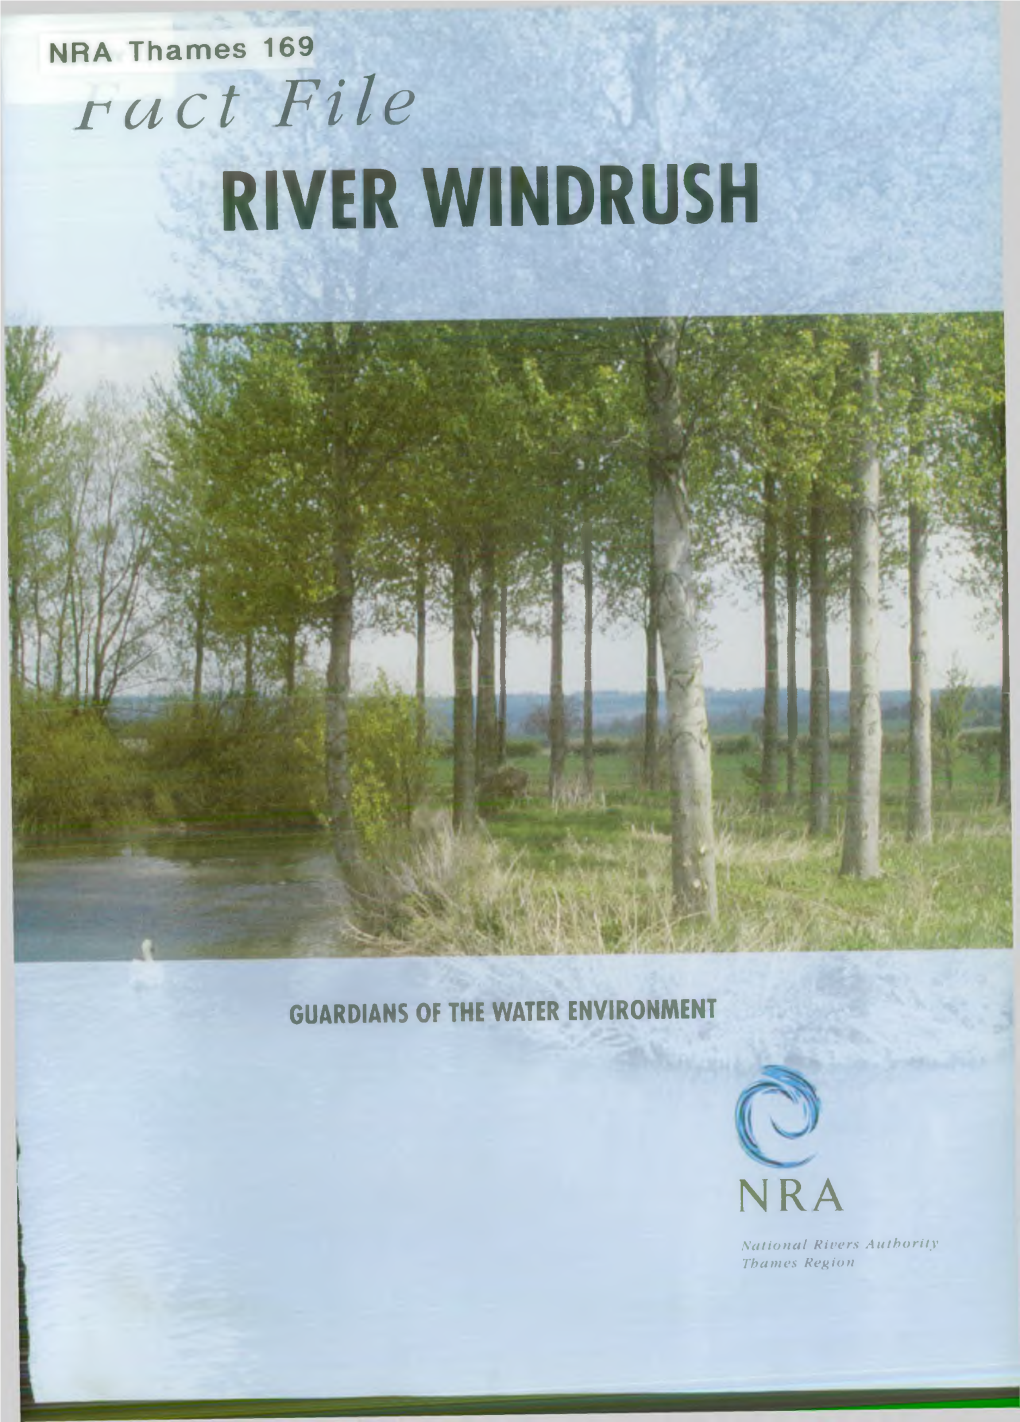 River Windrush